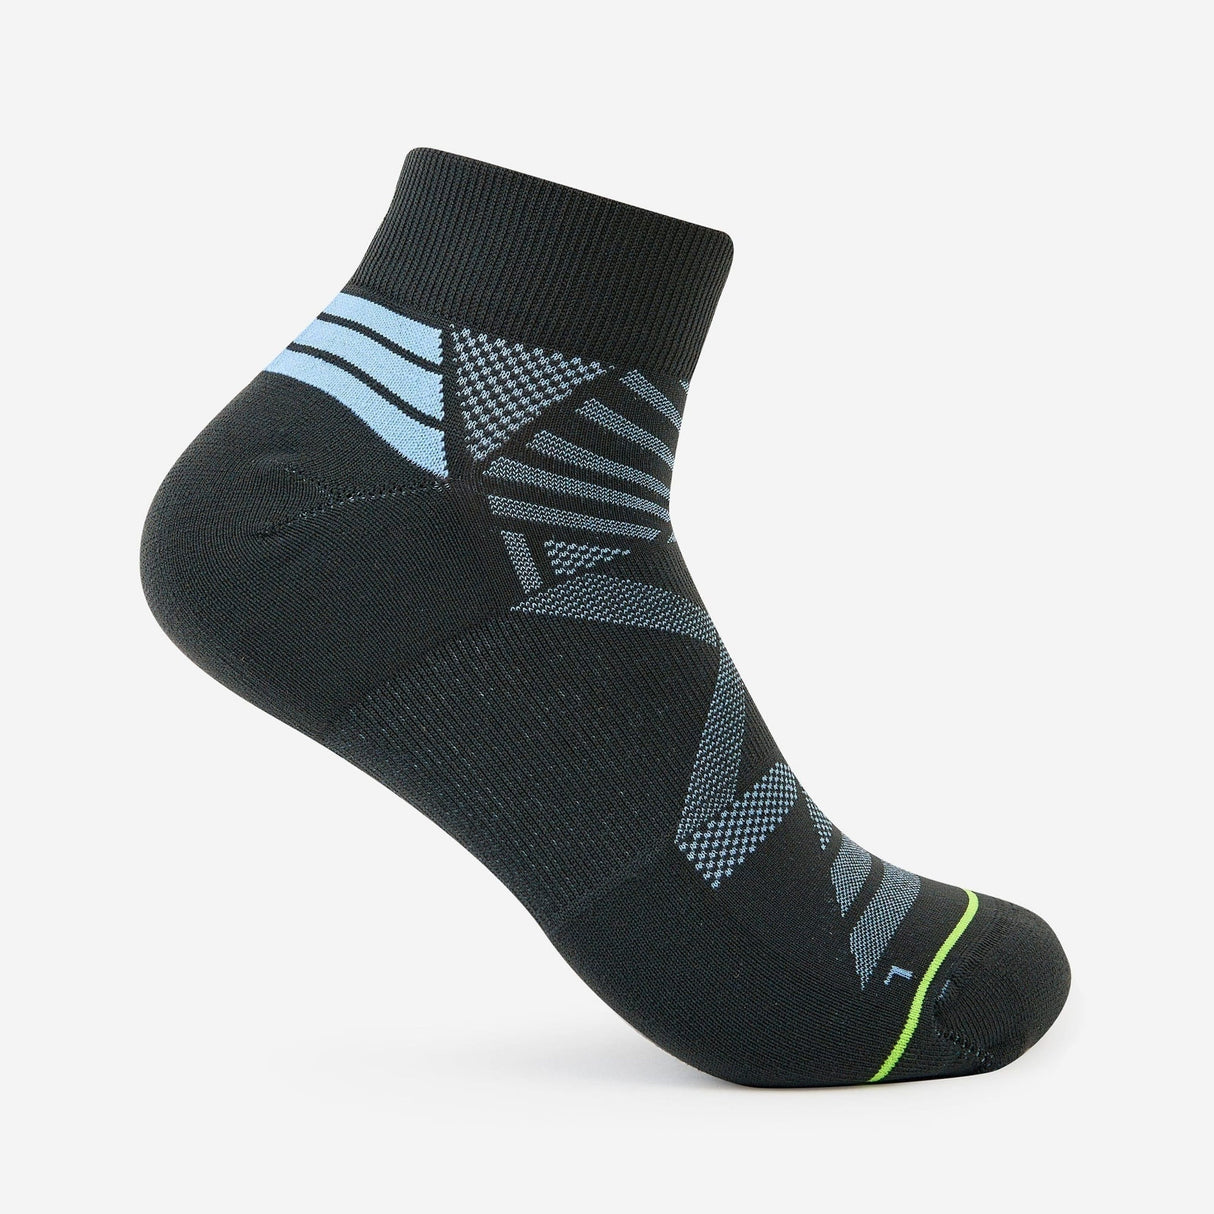 Thorlo Experia X Speed Performance Cushion Ankle Socks  - 